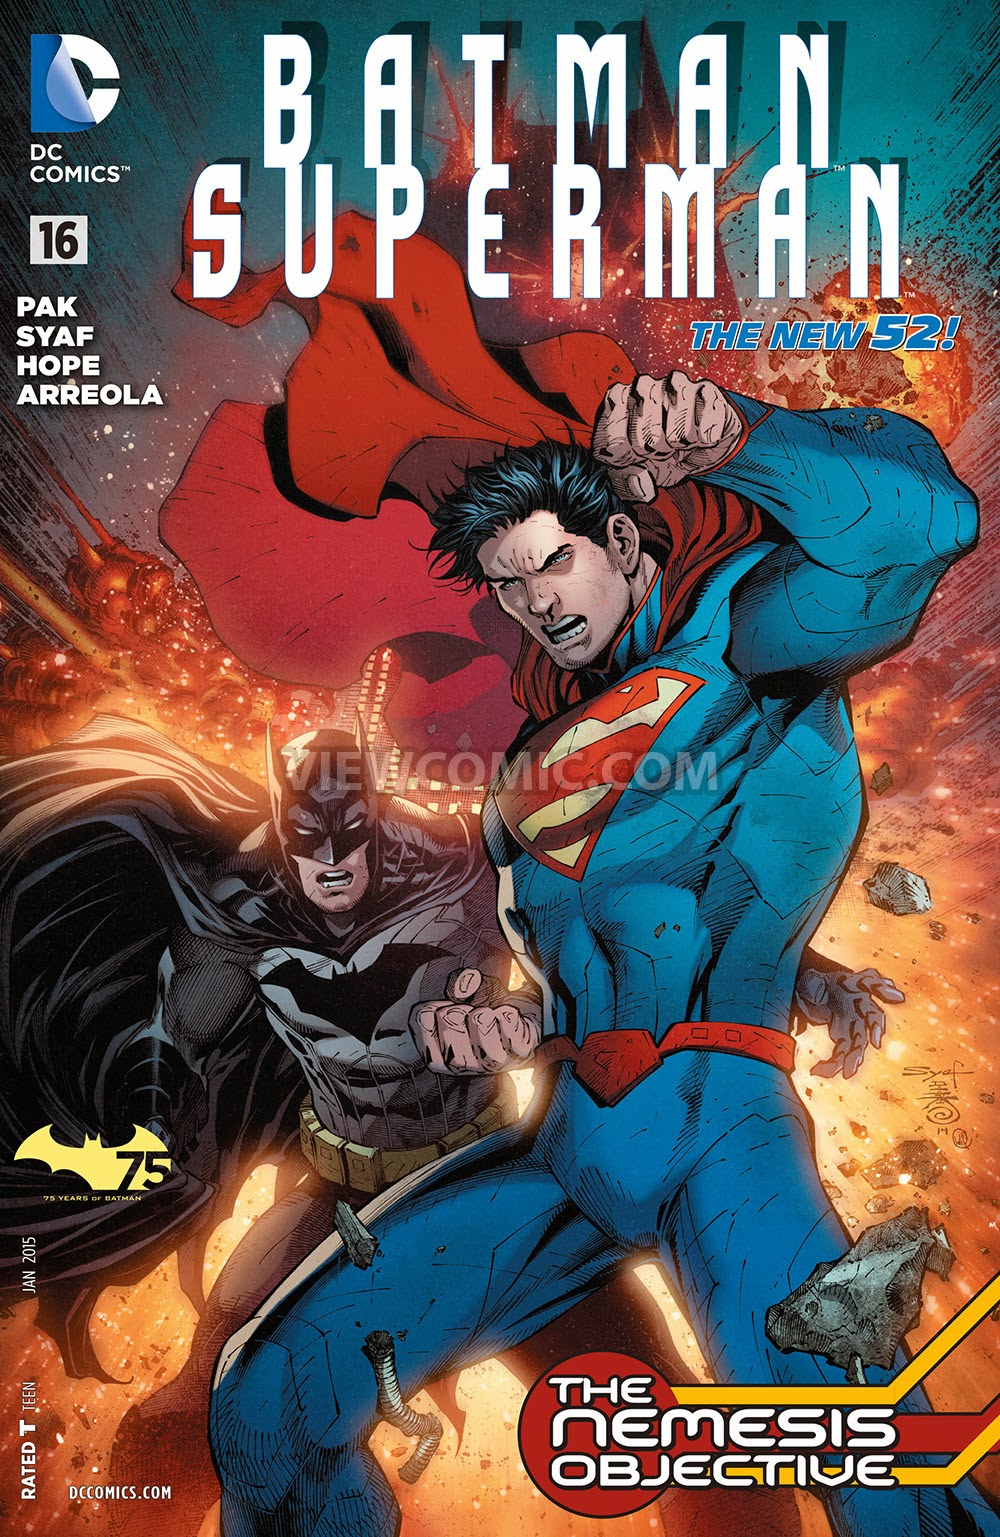 Batman Superman 16 2014 | Read Batman Superman 16 2014 comic online in high  quality. Read Full Comic online for free - Read comics online in high  quality .| READ COMIC ONLINE